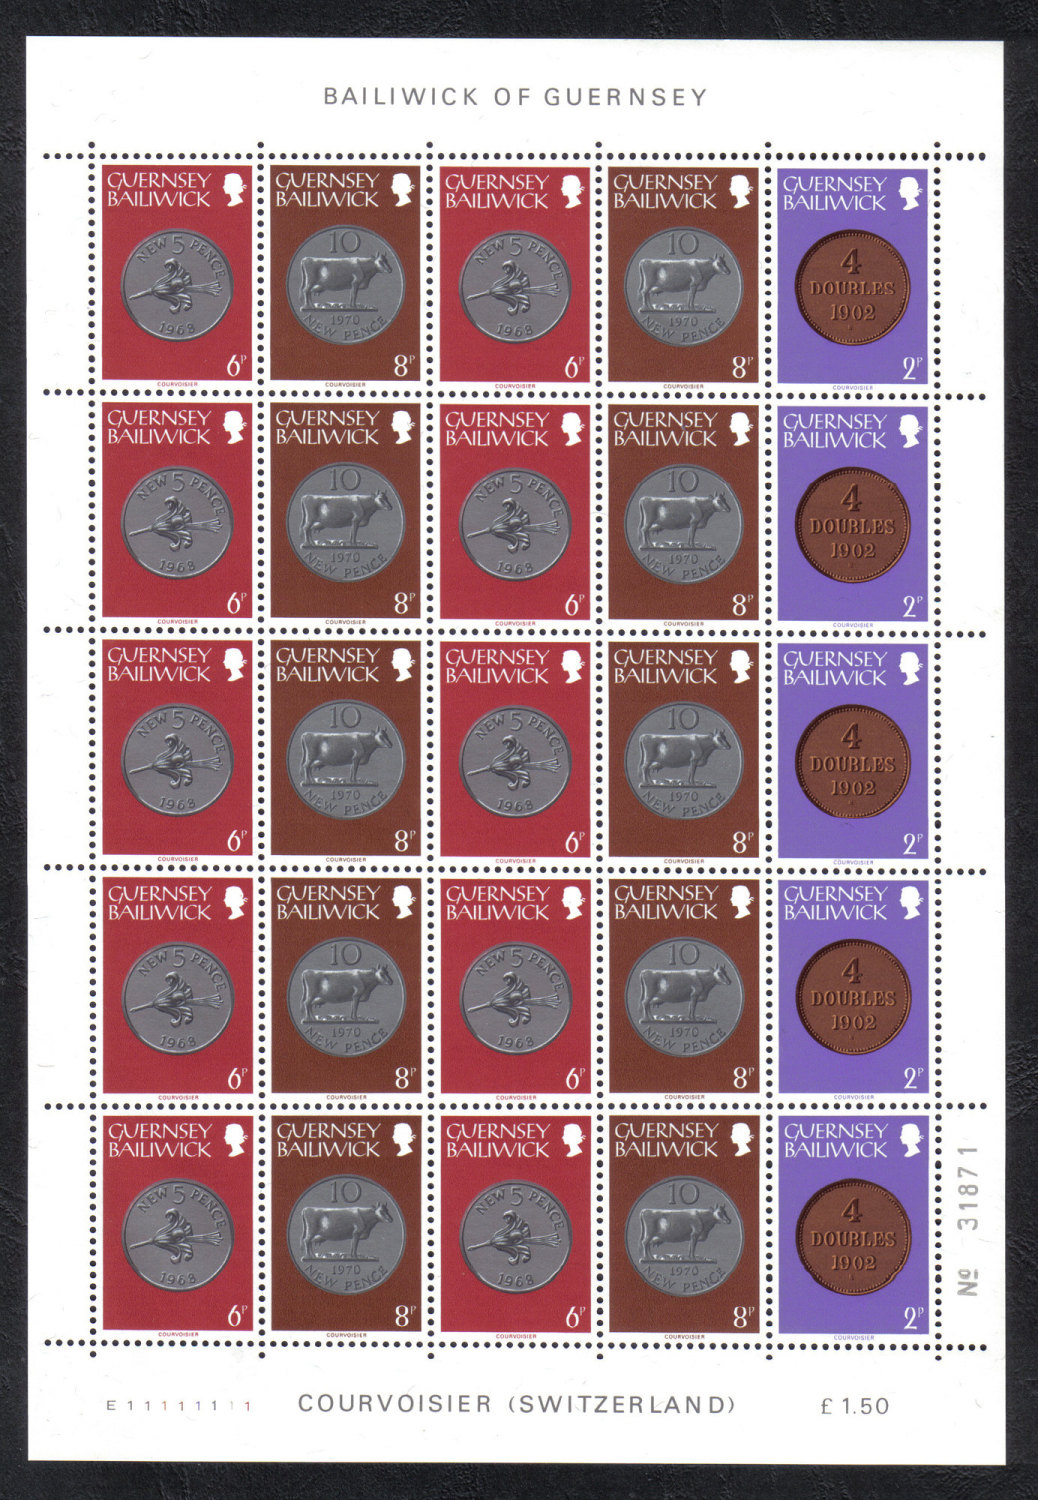 Guernsey Stamps 1979 Definitives Full sheet - MINT (z559)